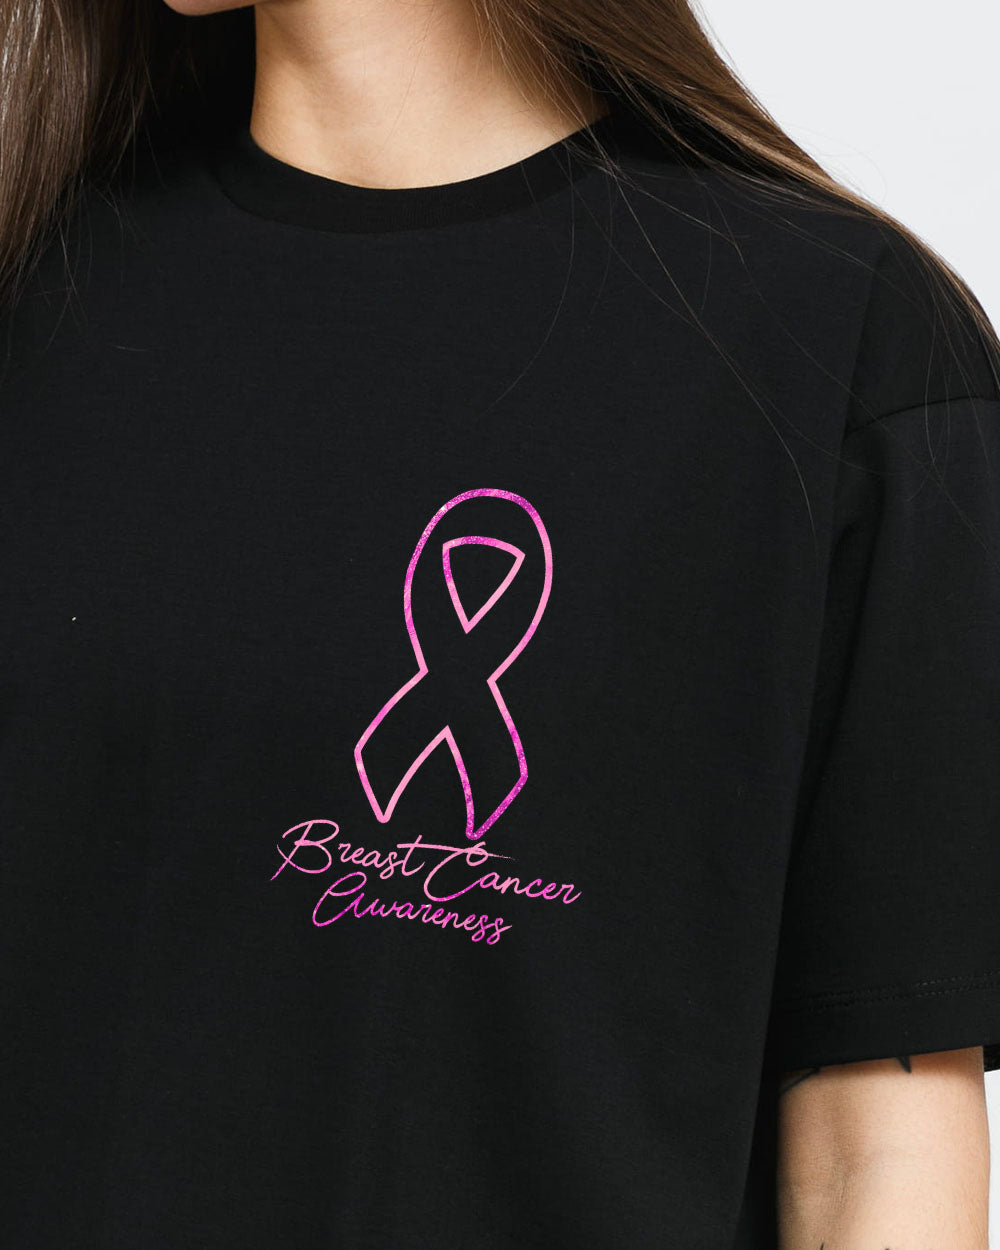 Wings Ribbon Spakle Women's Breast Cancer Awareness Tshirt